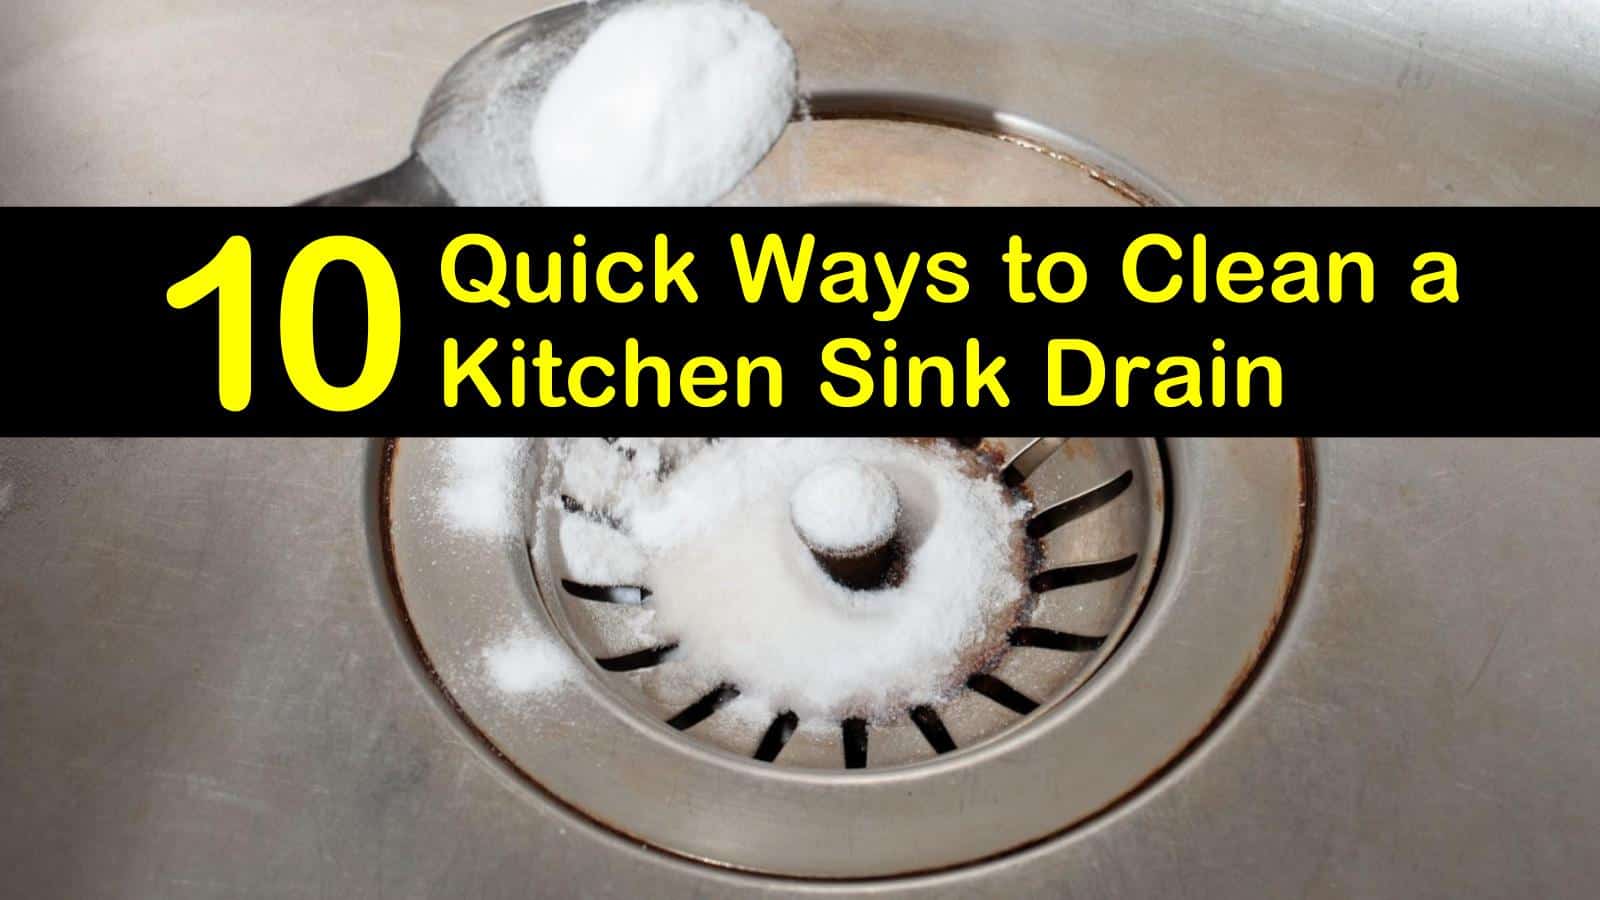 home depot kitchen sink drain cleaner